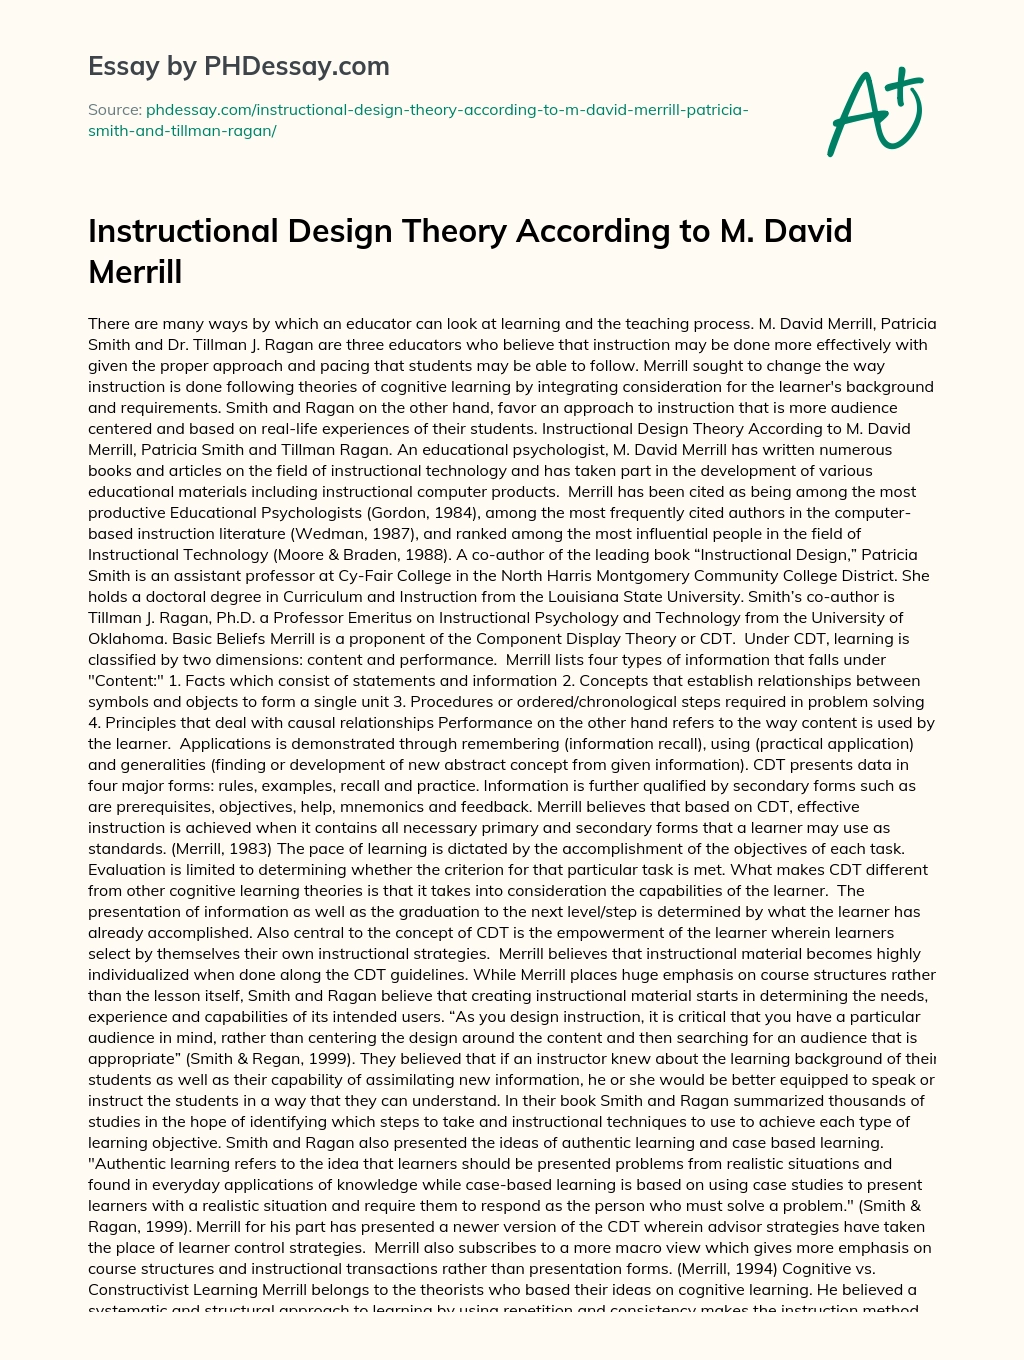 Instructional Design Theory According to M. David Merrill essay